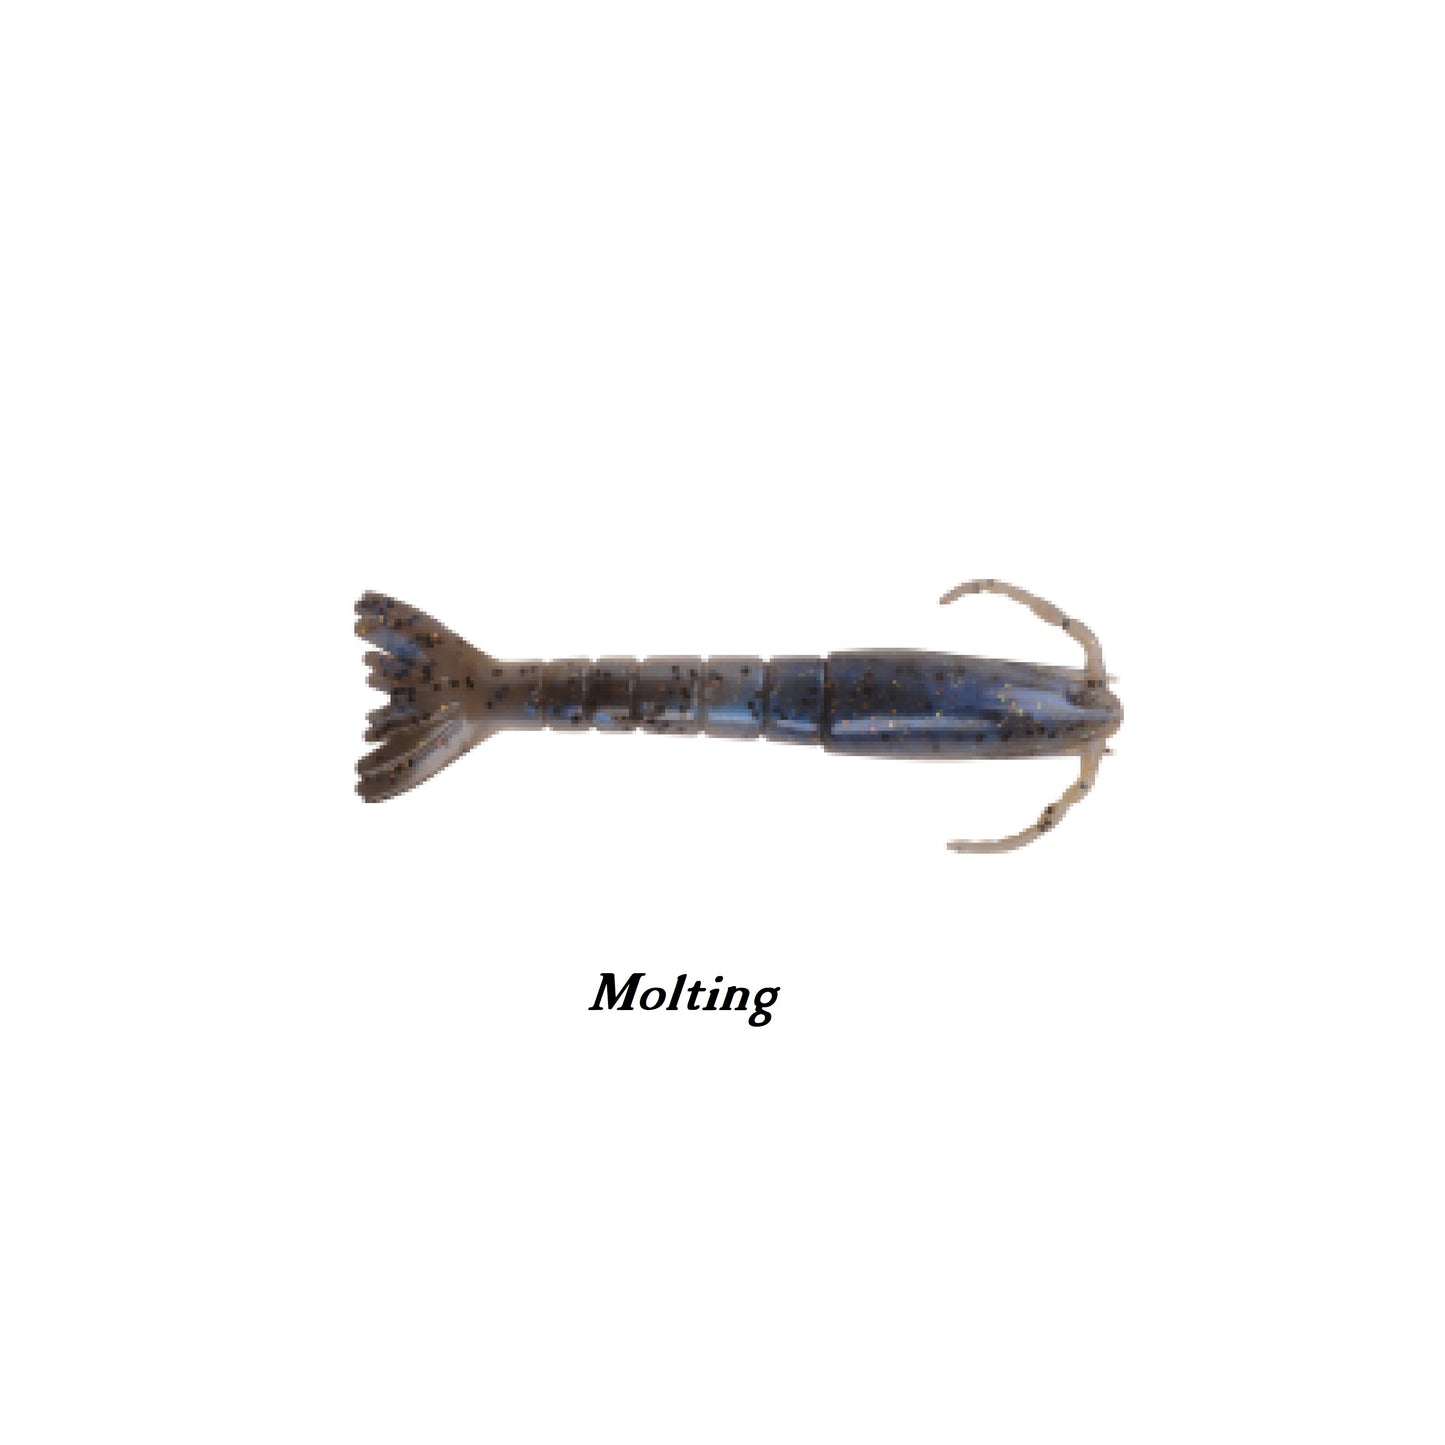 Berkley® Gulp!® Saltwater Shrimp 3 IN